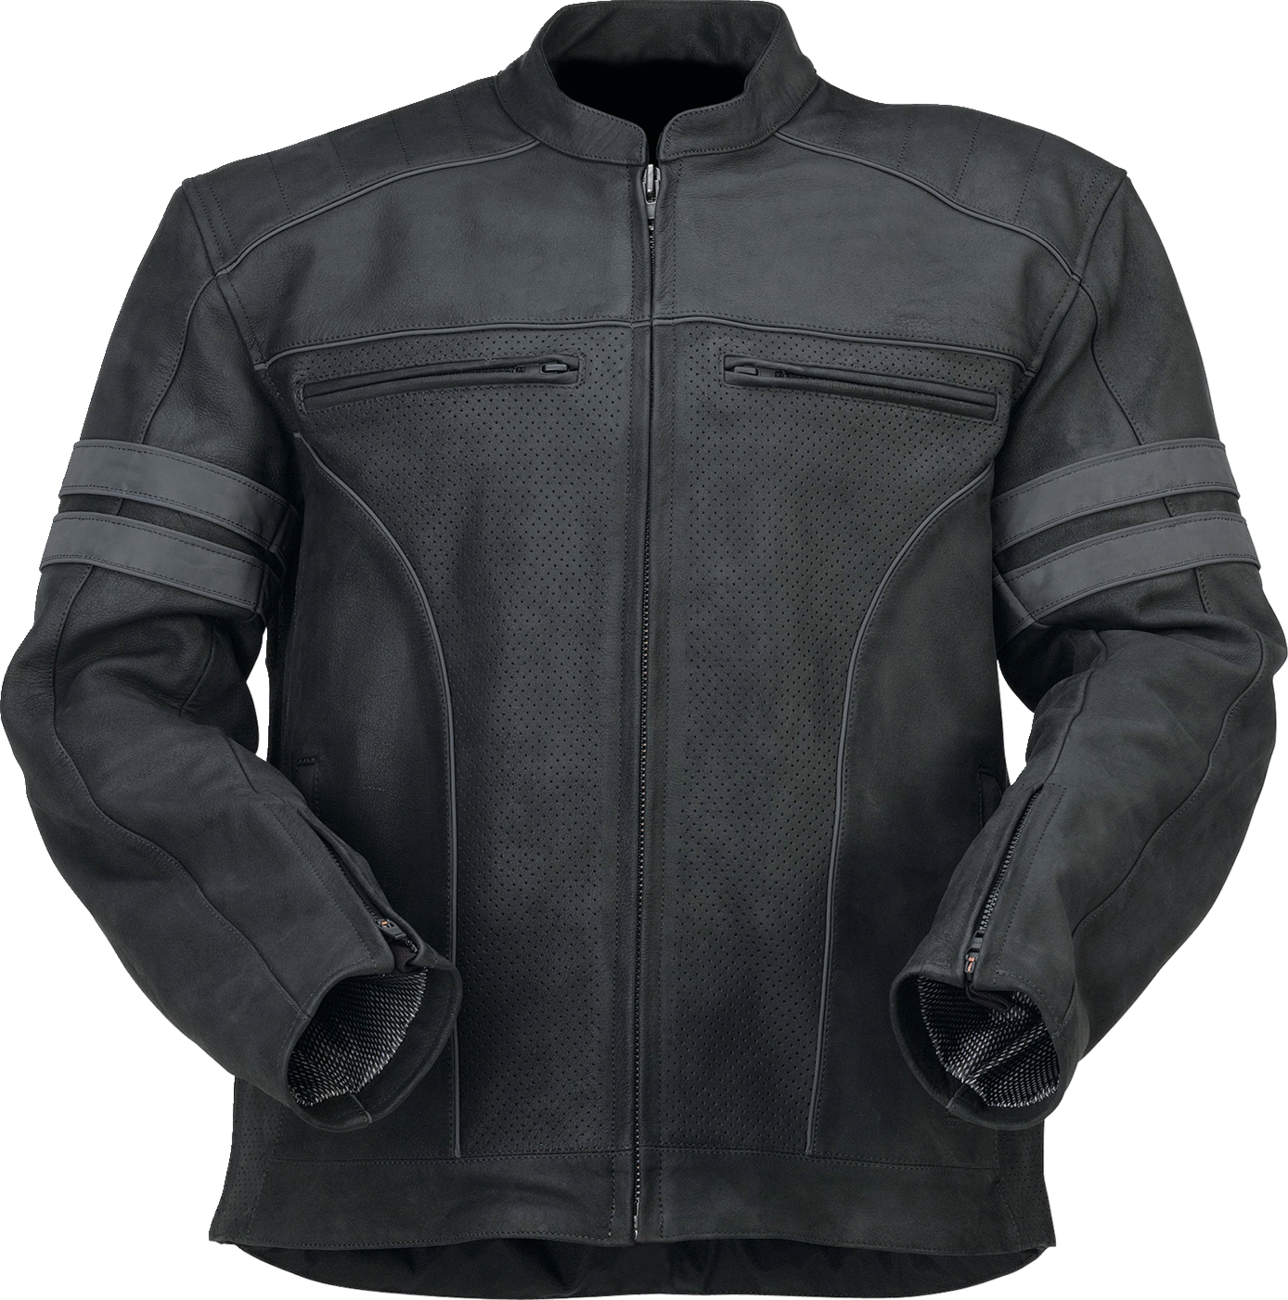 Z1R Remedy Leather Jacket - Black - Small 2810-3889